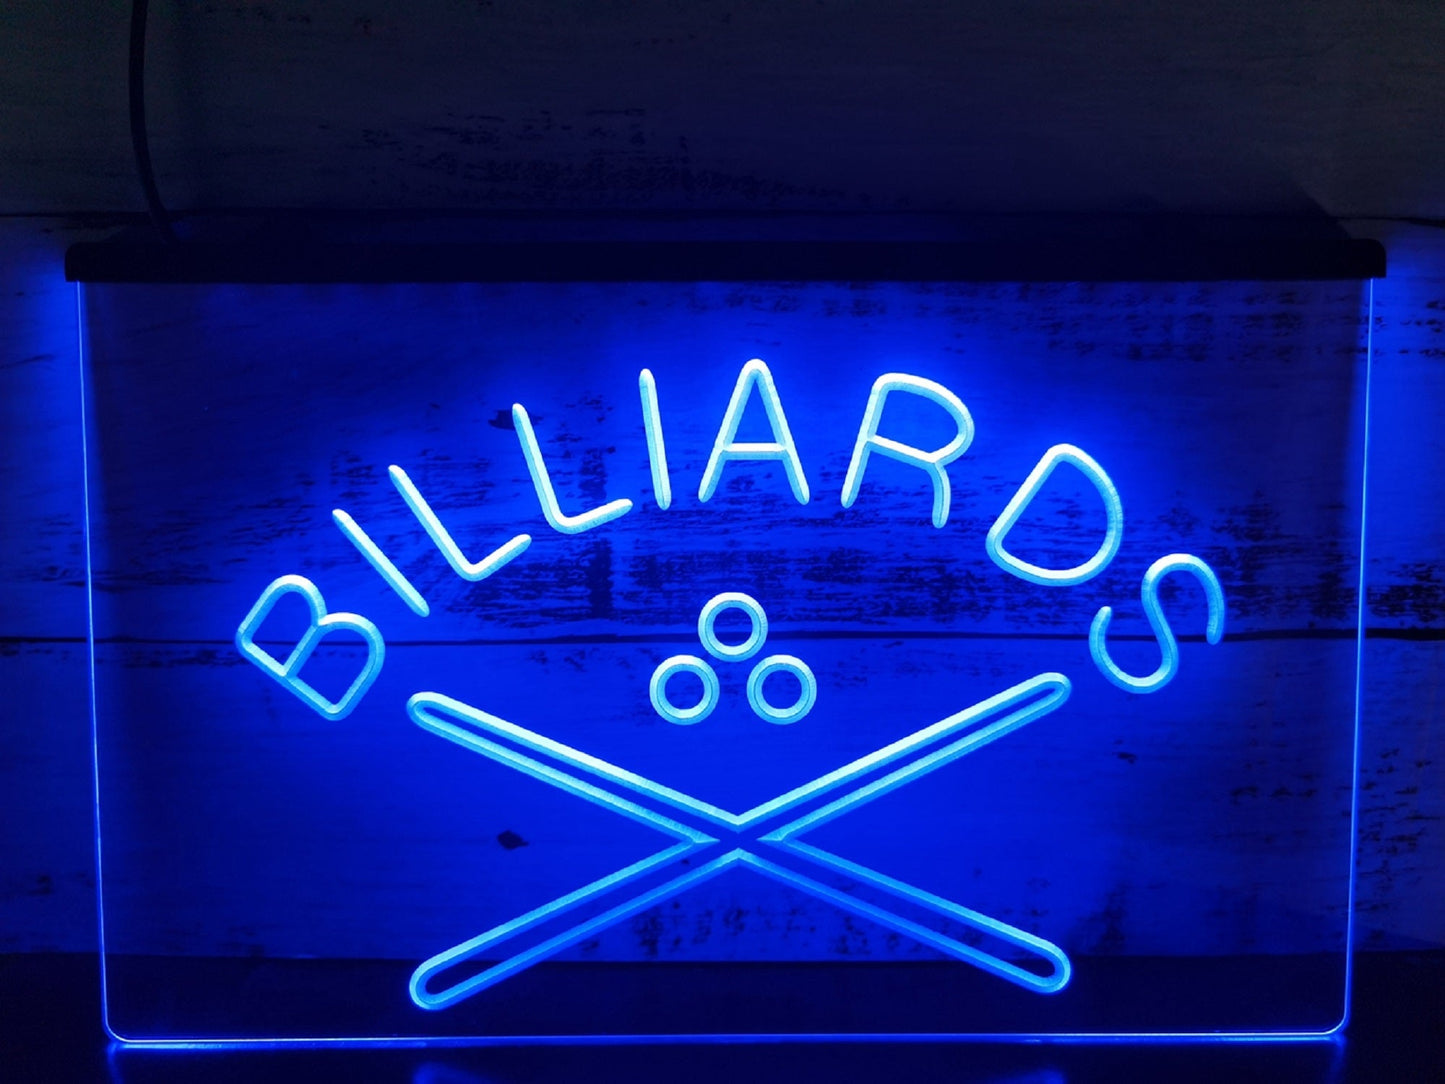 Neon Sign Billiards Cue Wall Desktop Billiards hall Decor Free Shipping